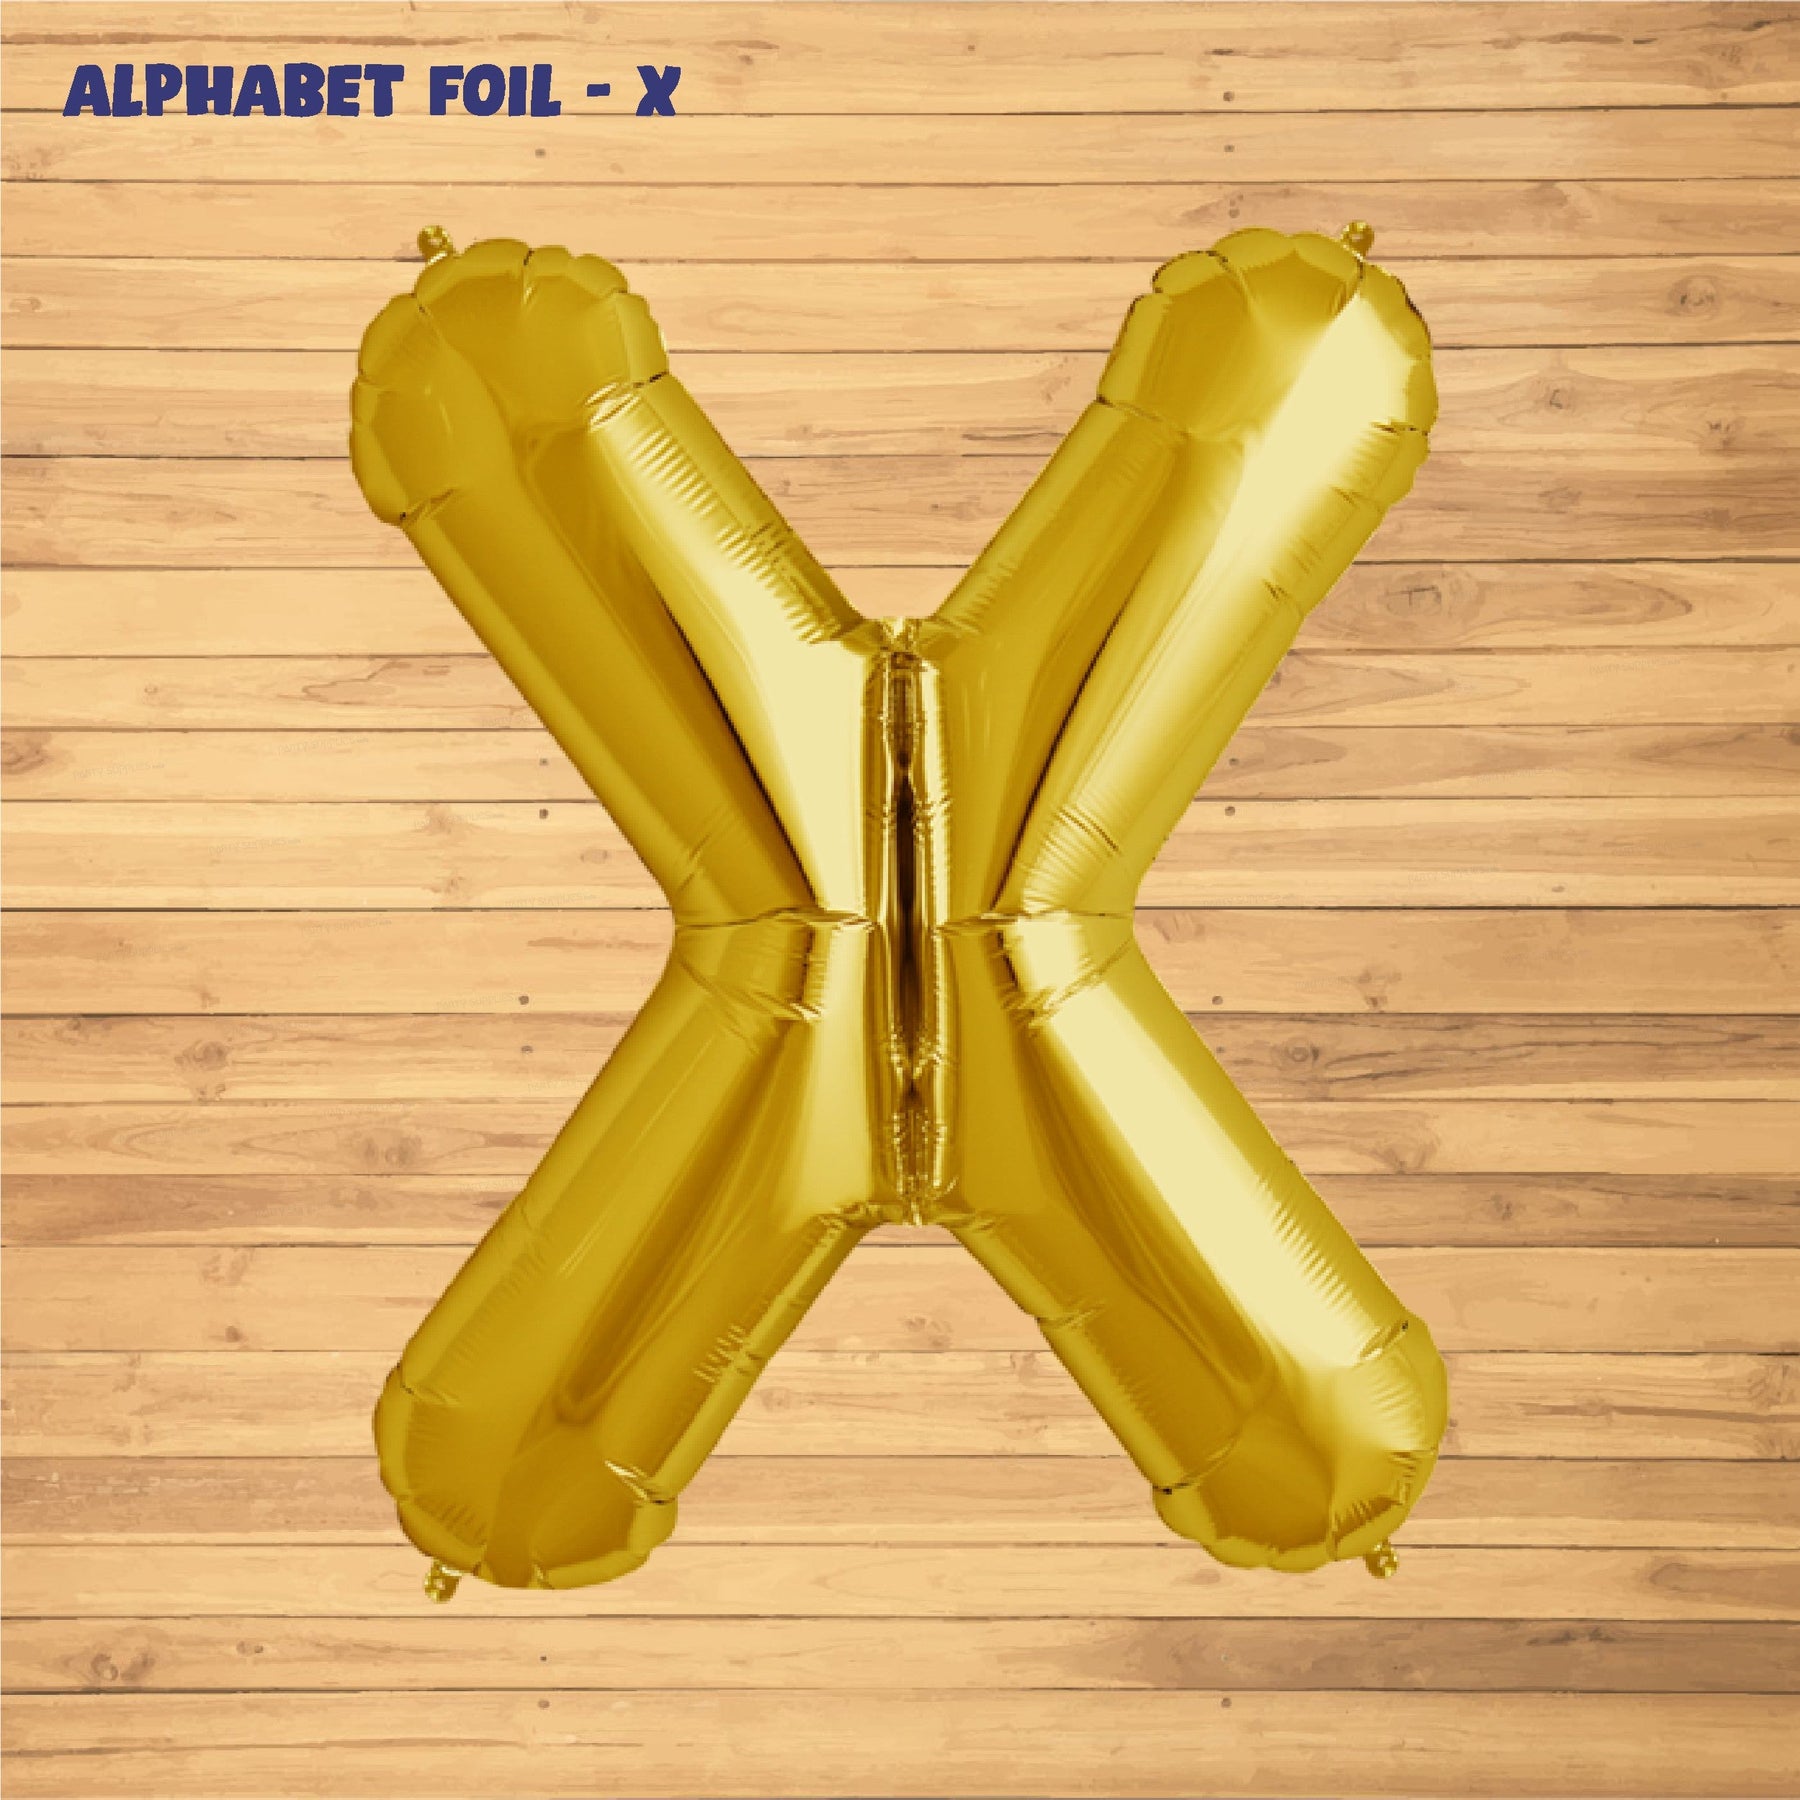 Alphabet X Premium Gold Foil Balloon